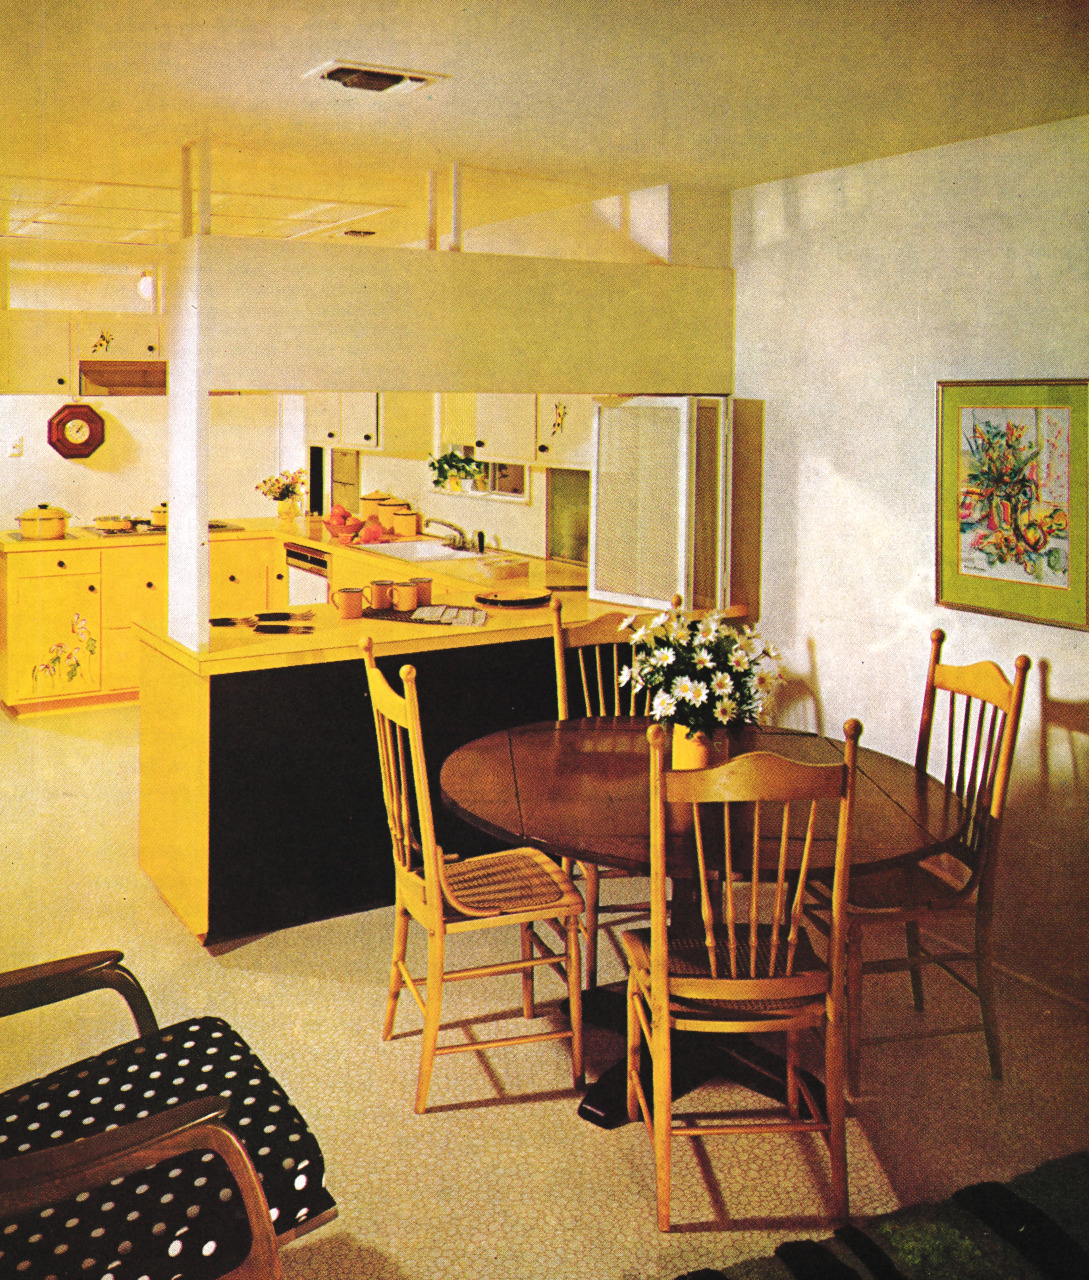 1970s Kitchen and Dining Room Decor - The Giki Tiki